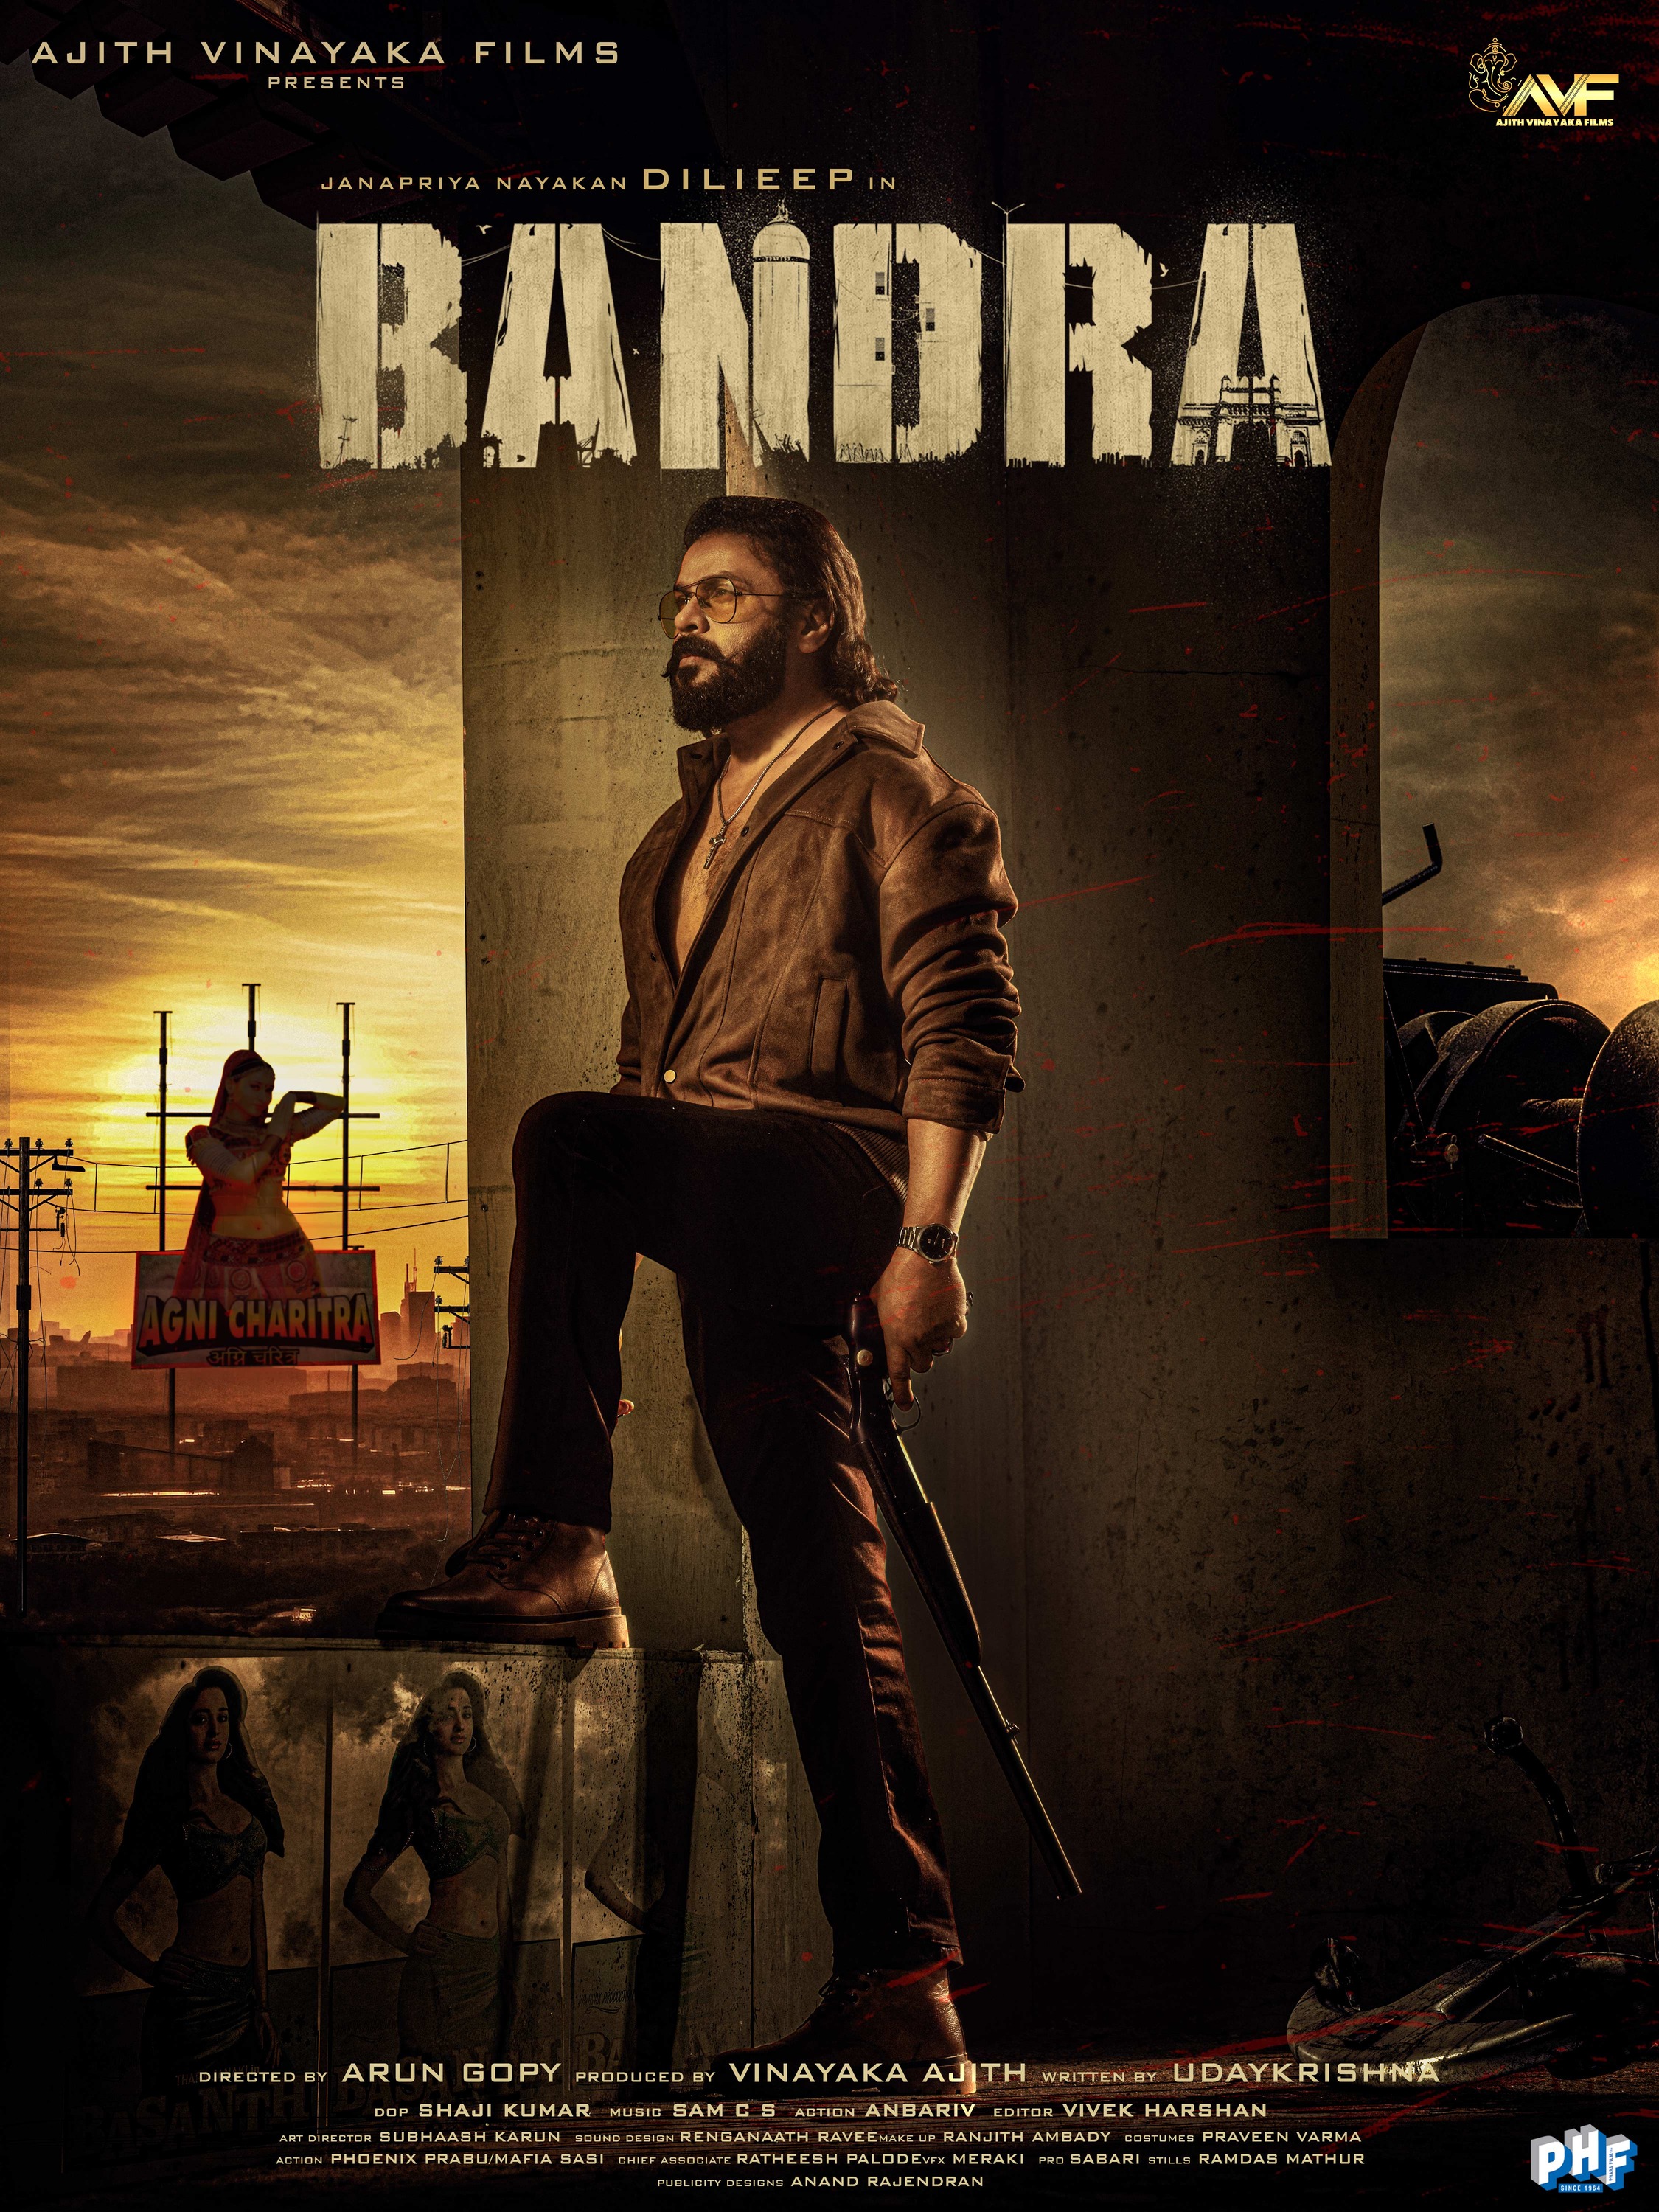 Mega Sized Movie Poster Image for Bandra (#9 of 11)